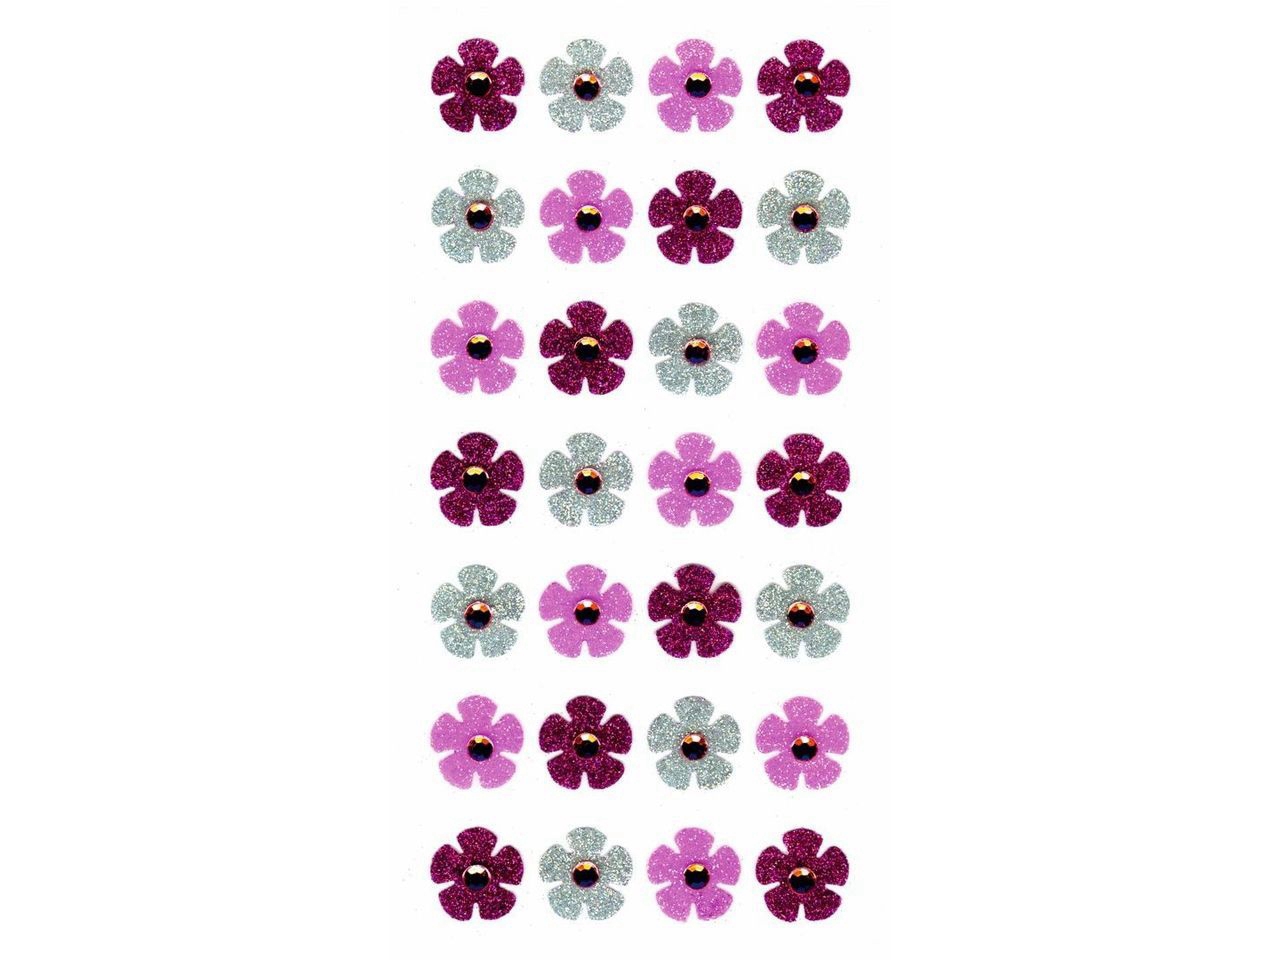 Handmade Sticker Fiori con rhinestone, pink, argento, viola